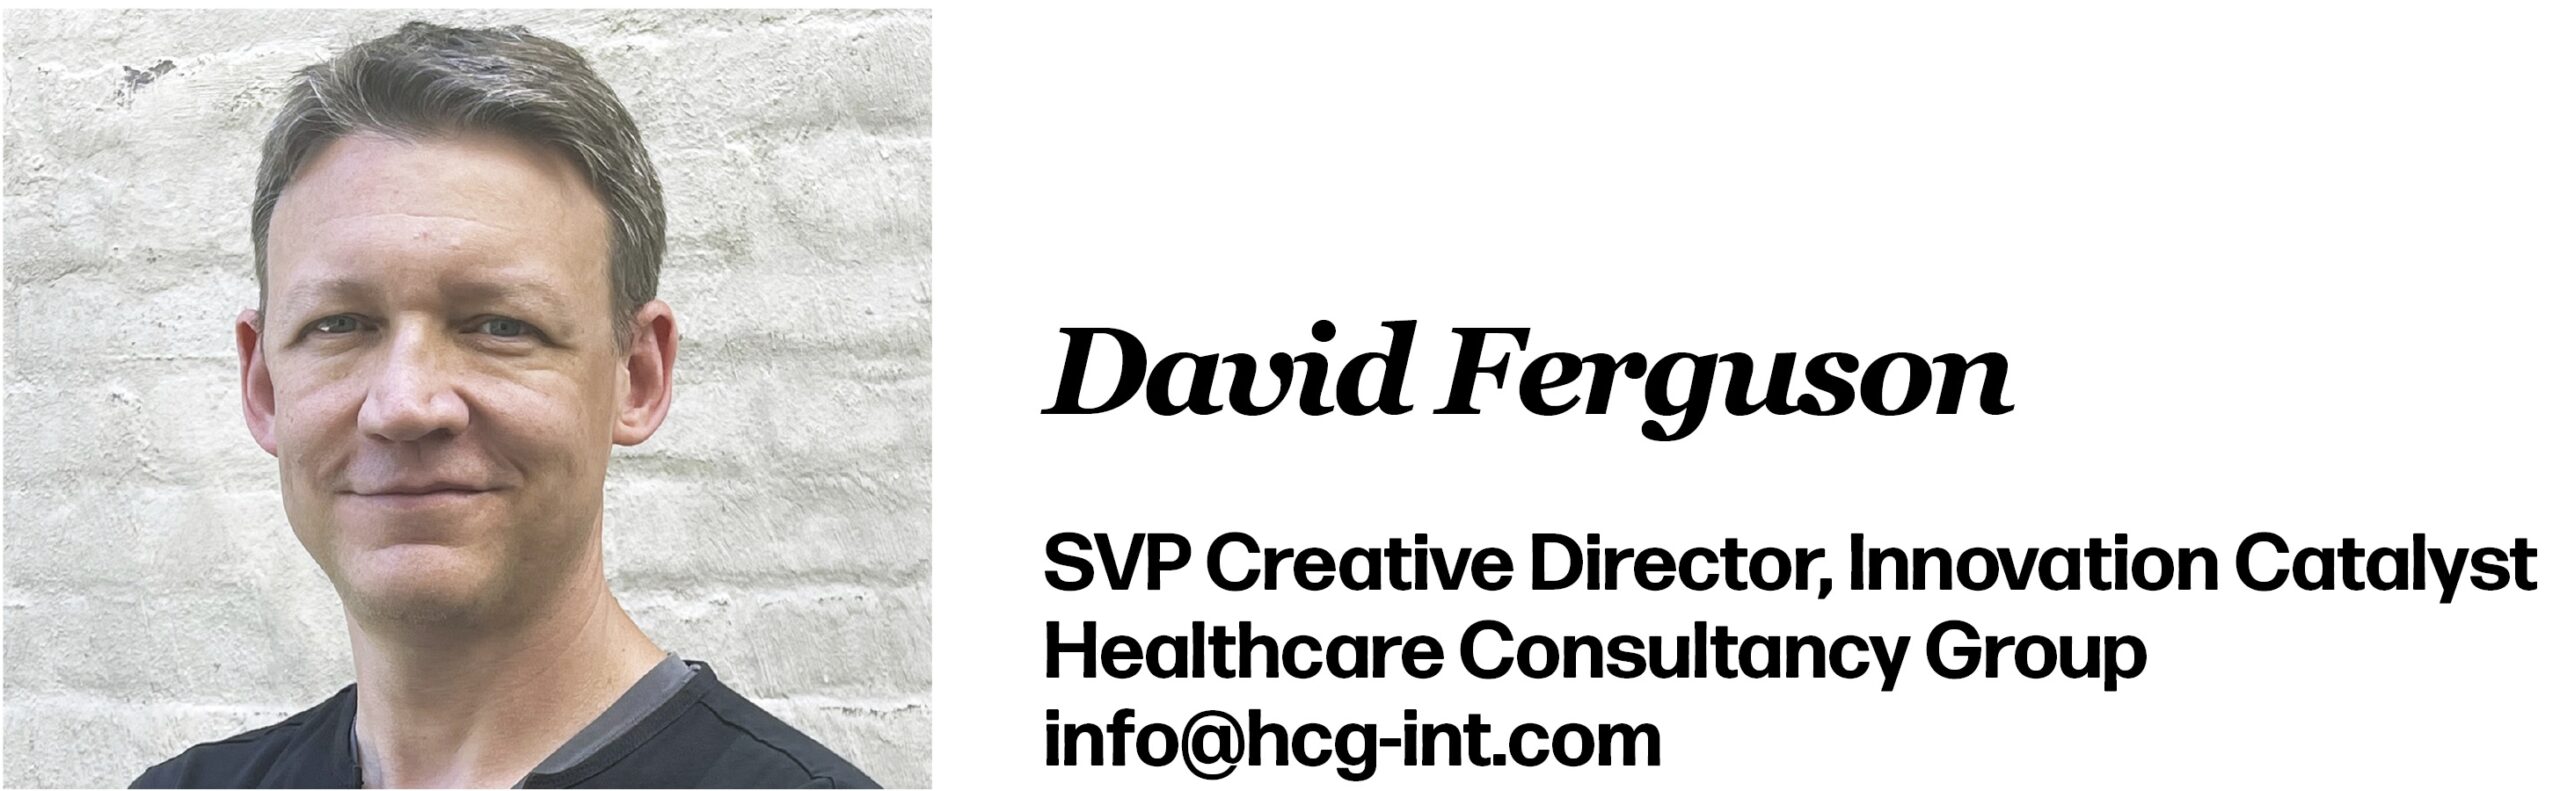 David Ferguson SVP Creative Director, Innovation Catalyst Healthcare Consultancy Group info@hcg-int.com 